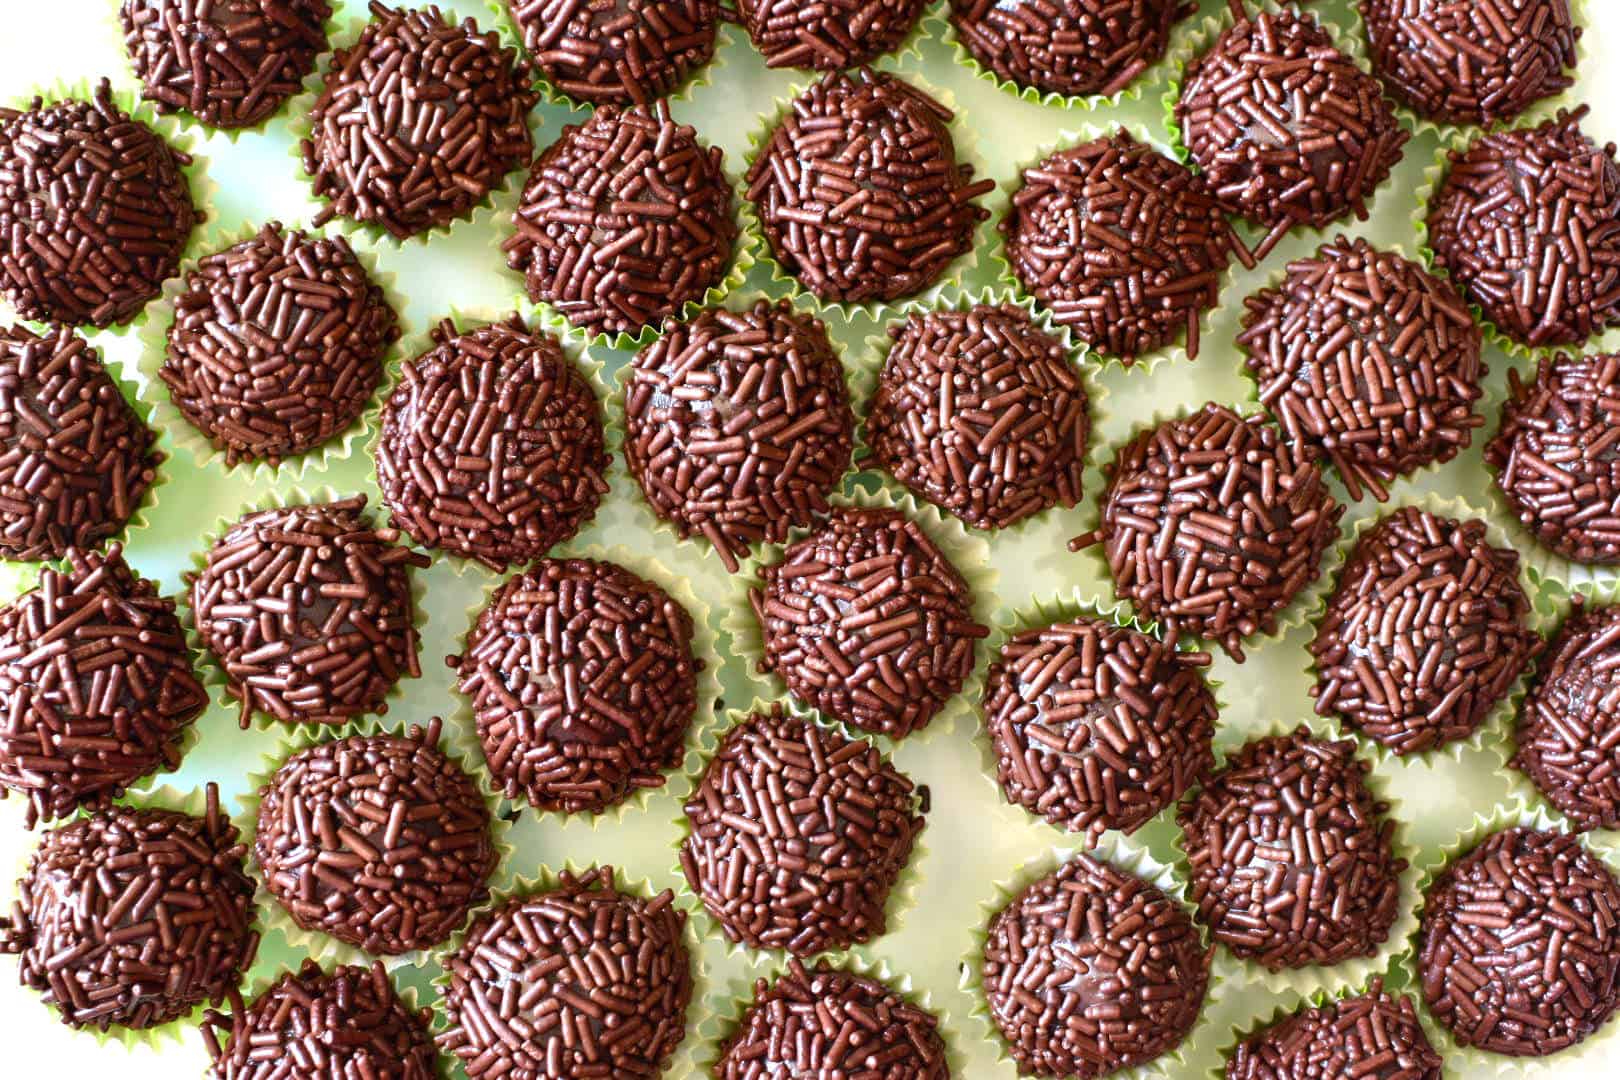 Brazilian chocolate truffles on a tray.